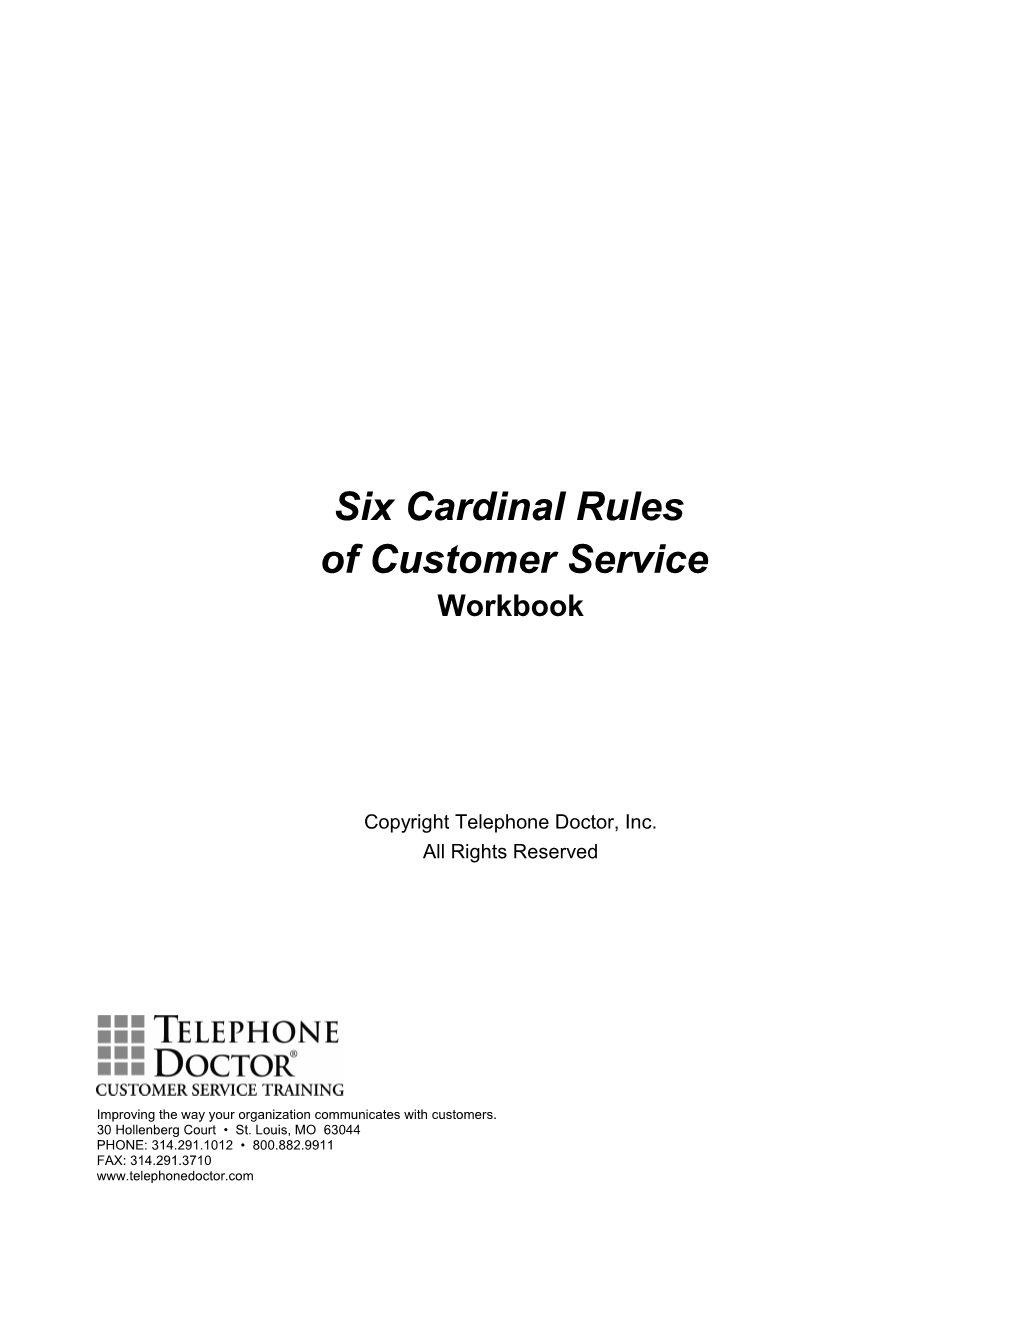 6 Six Cardinal Rules of Customer Service